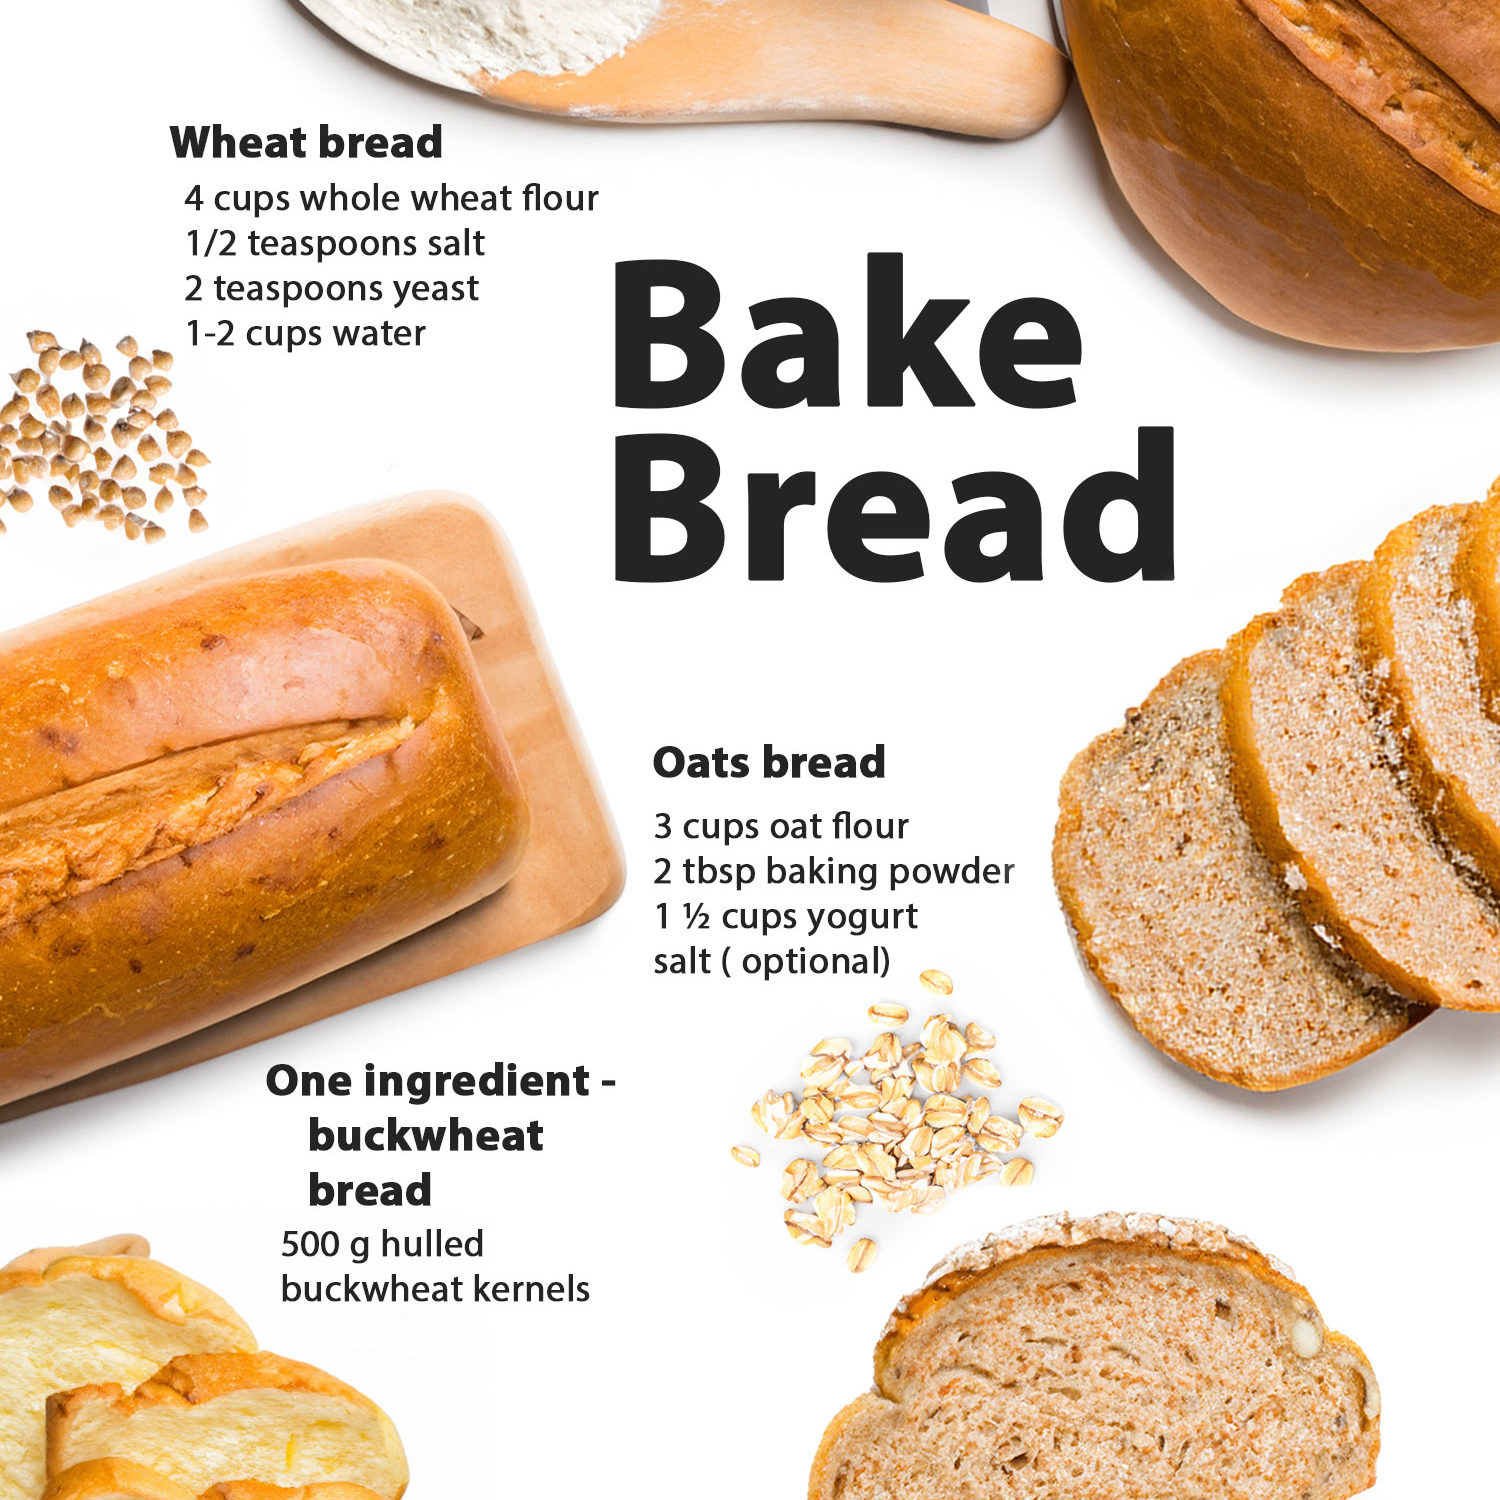 bake-bread